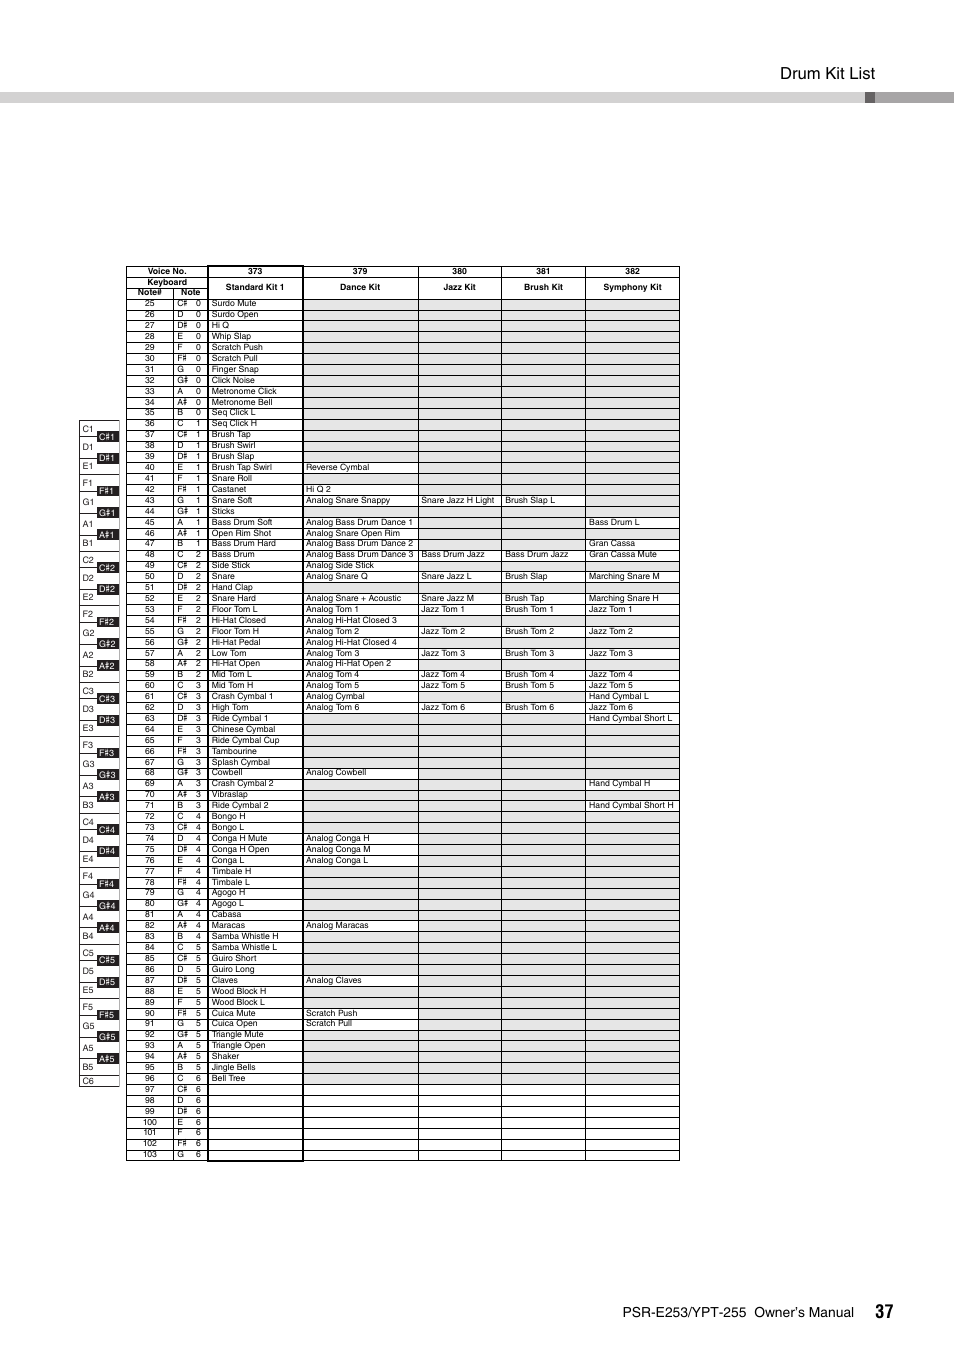 Drum kit list | Yamaha PSR-E253 User Manual | Page 37 / 48